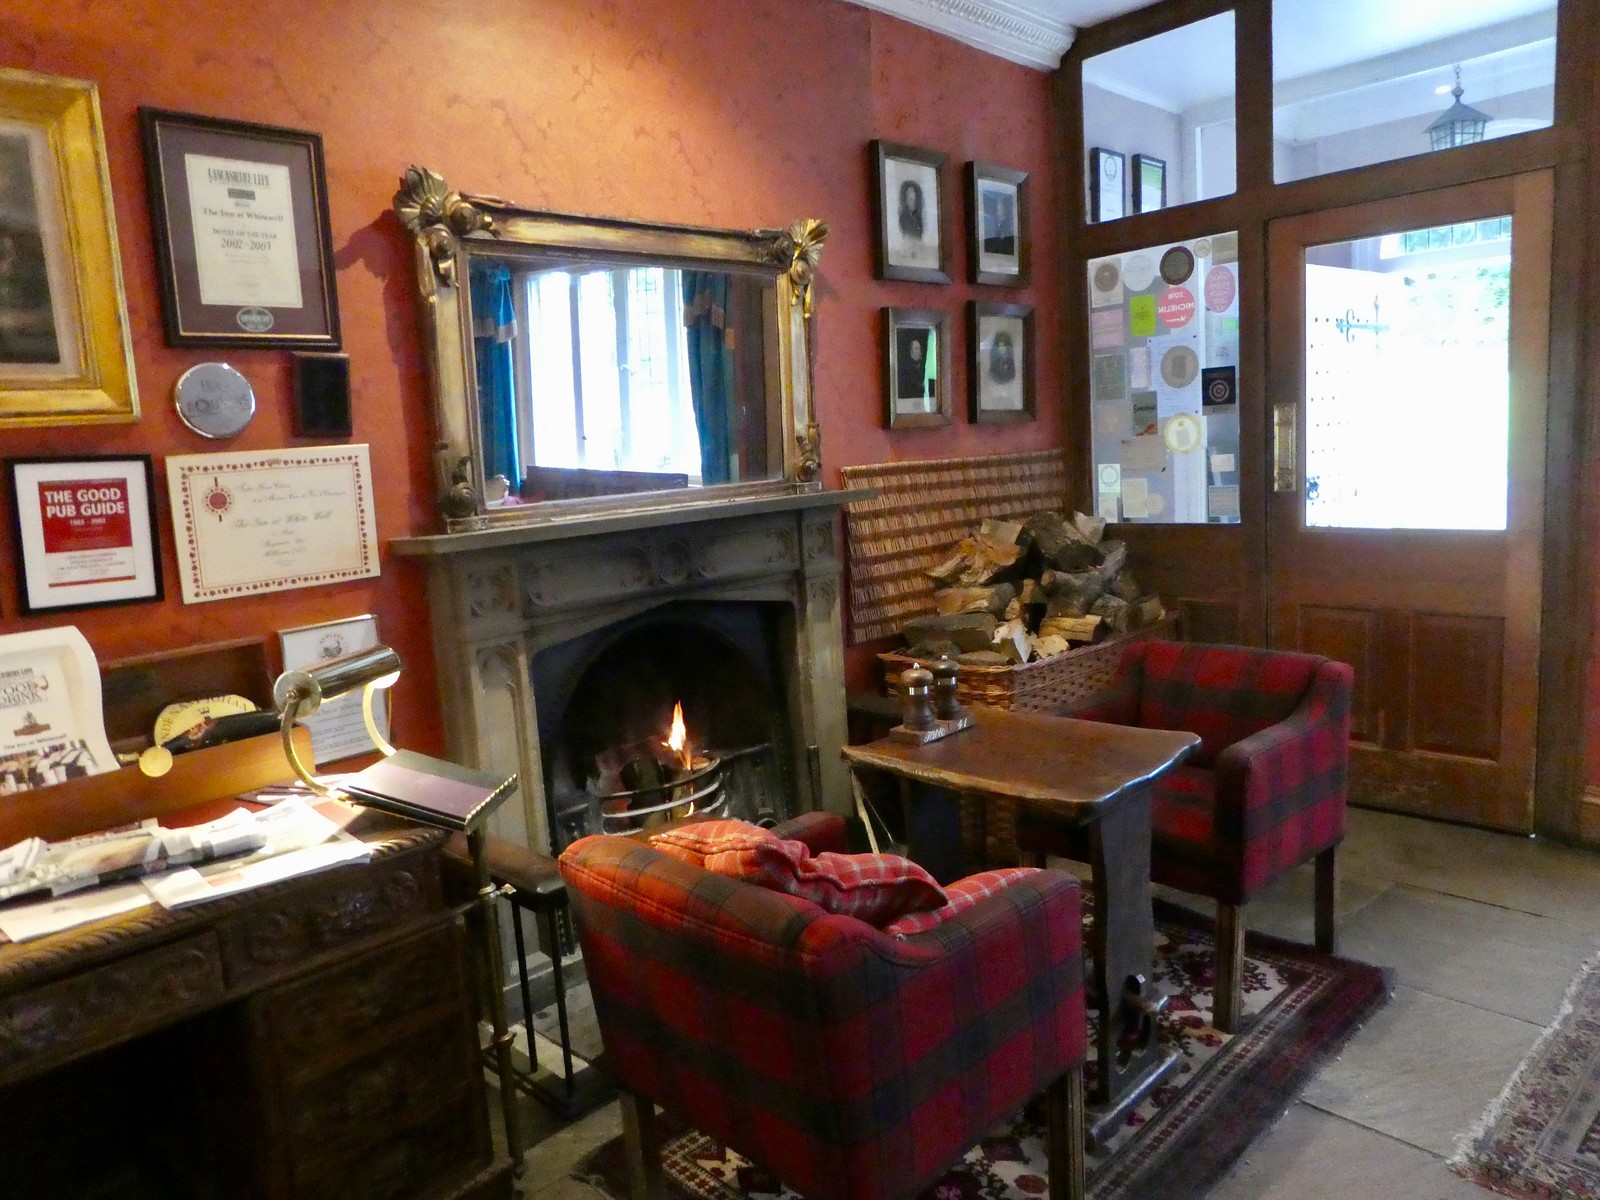 The Inn at Whitewell, near Clitheroe